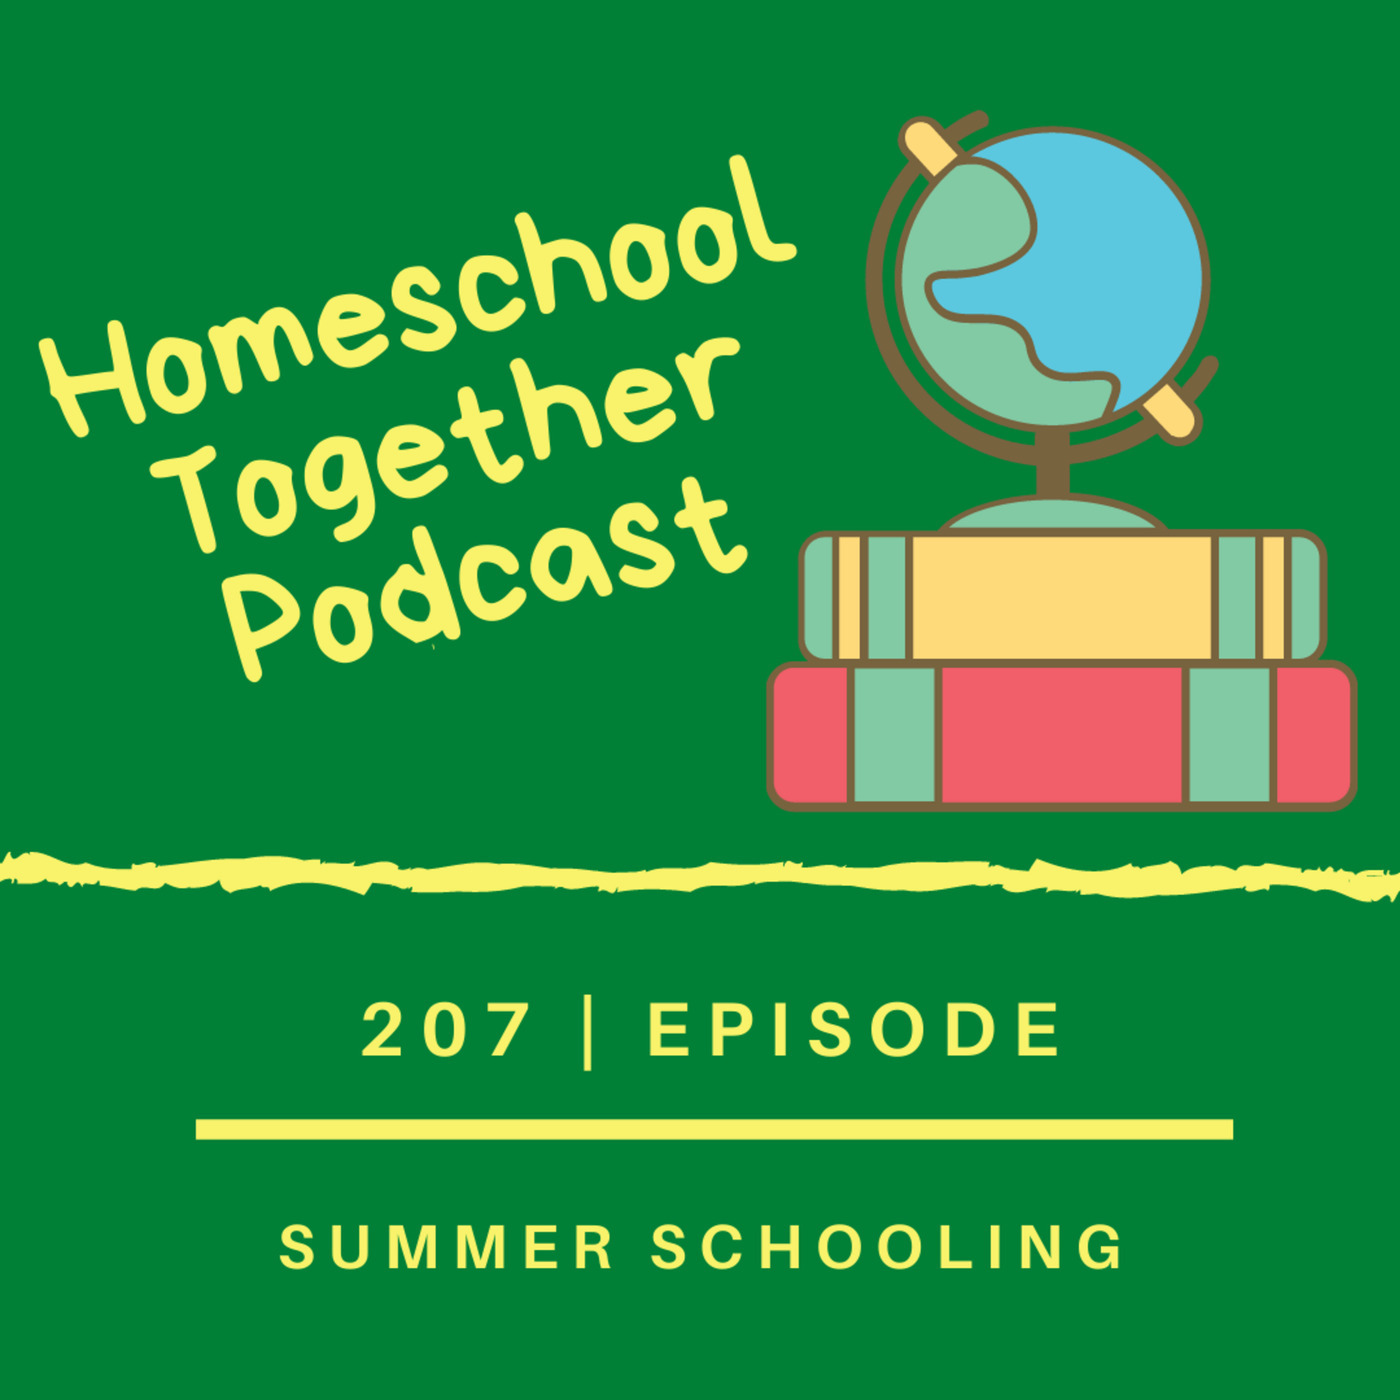 Homeschool Together Podcast 207: Summer Schooling